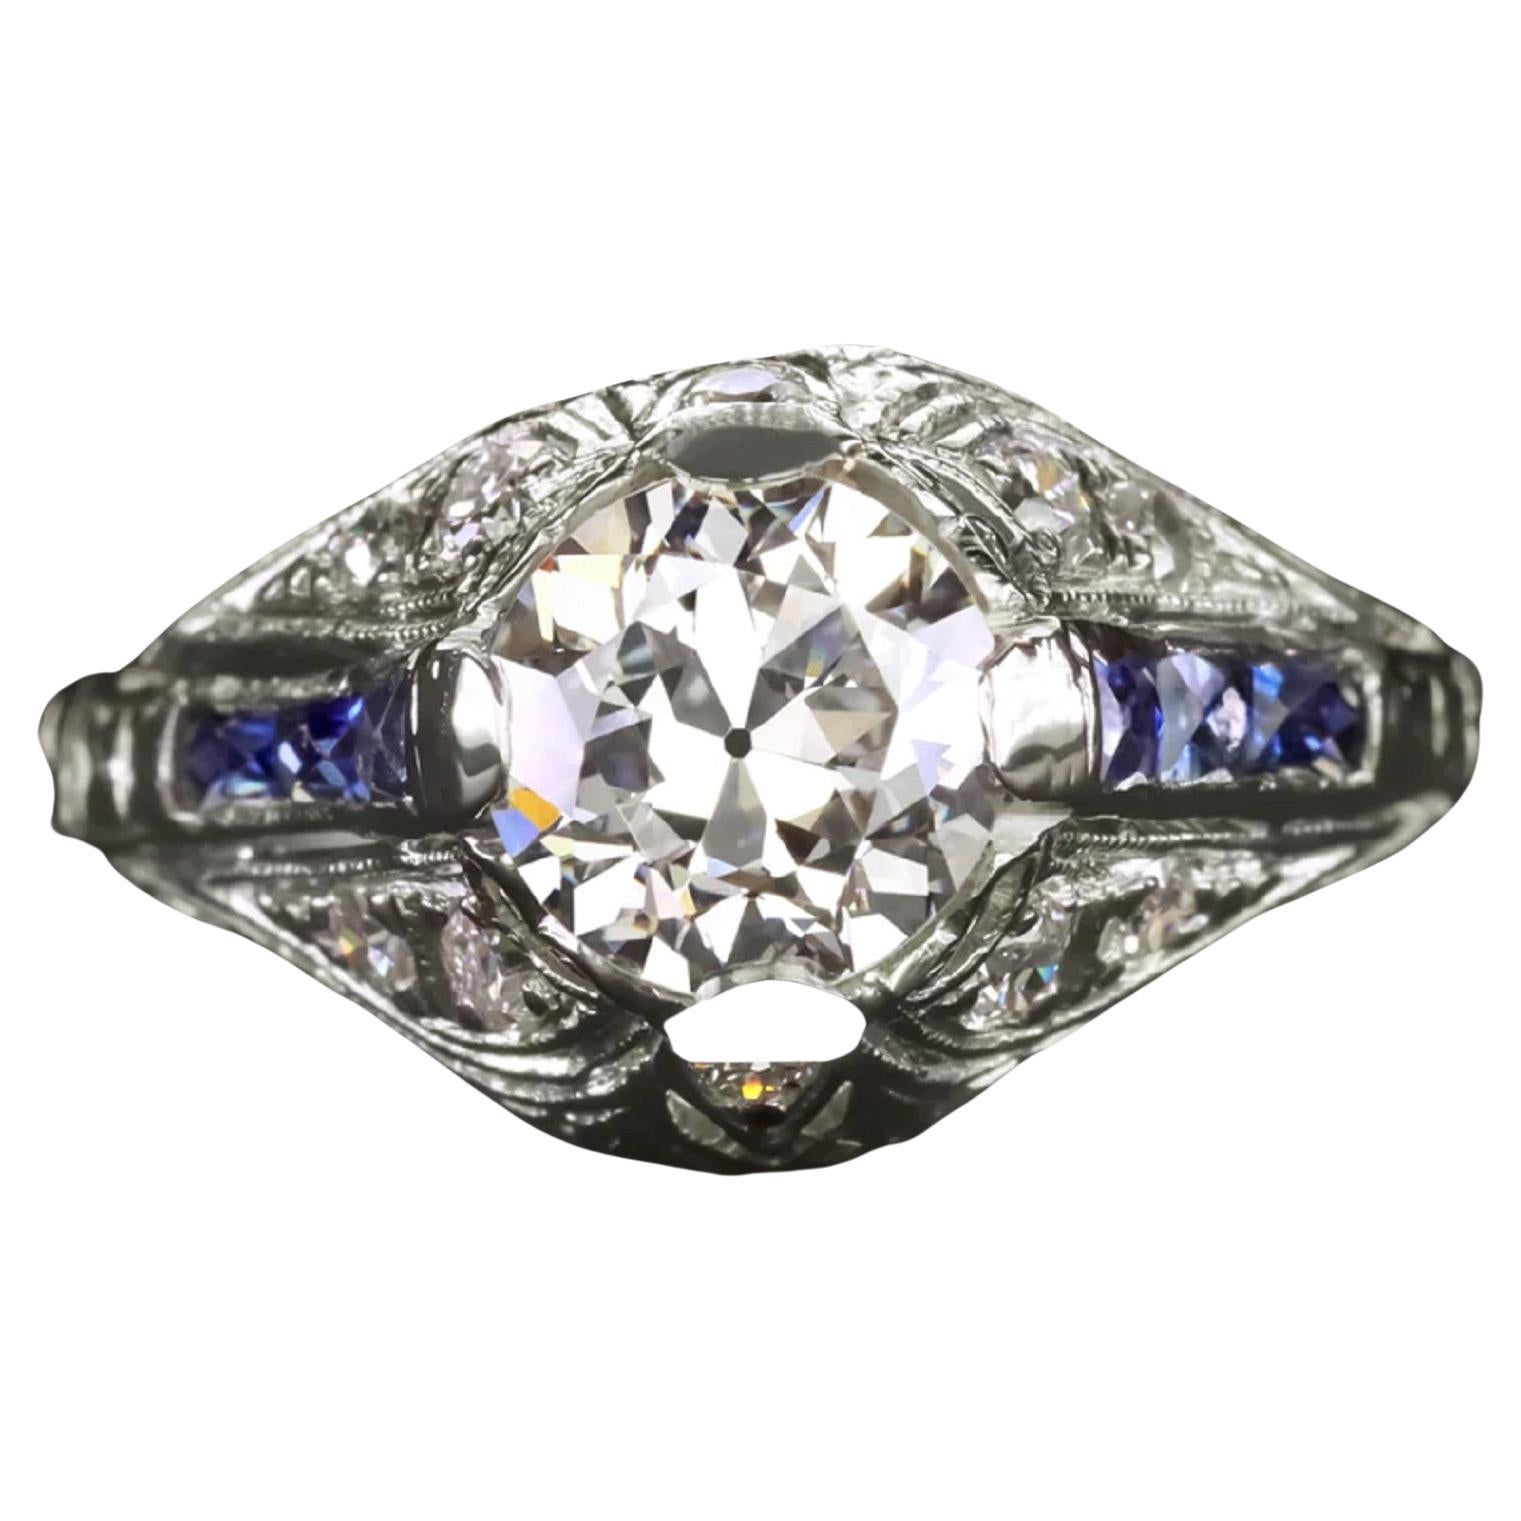 Authentic Vintage Carat Old European Cut Diamond Impressive Ring For Sale